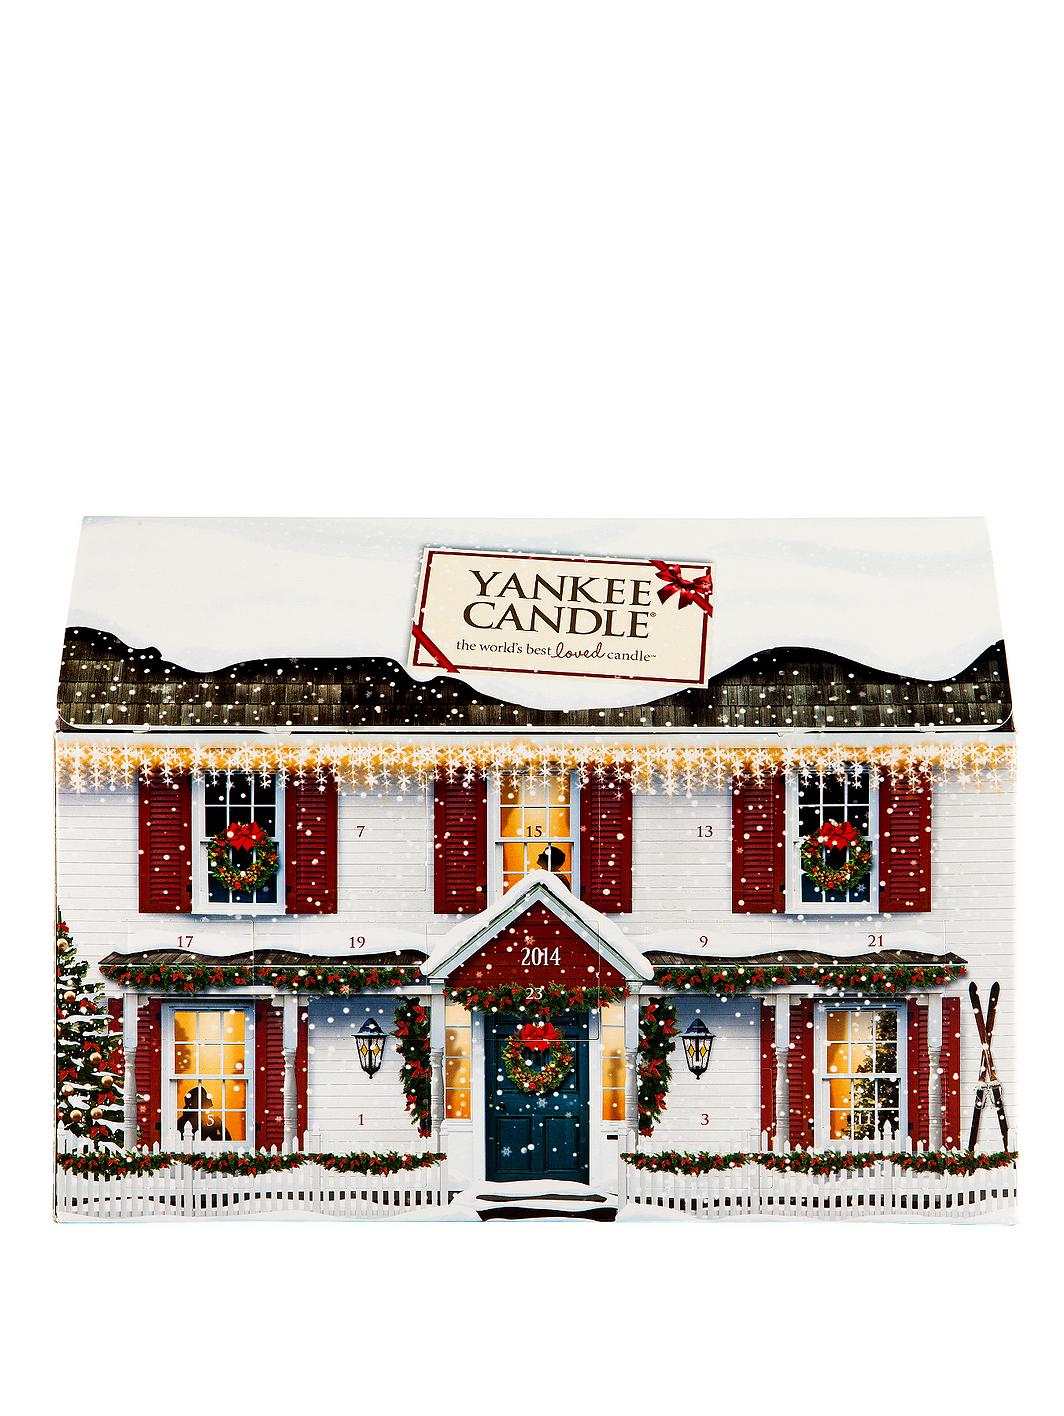 Yankee candle, adventskalender 2014, advent, calendar